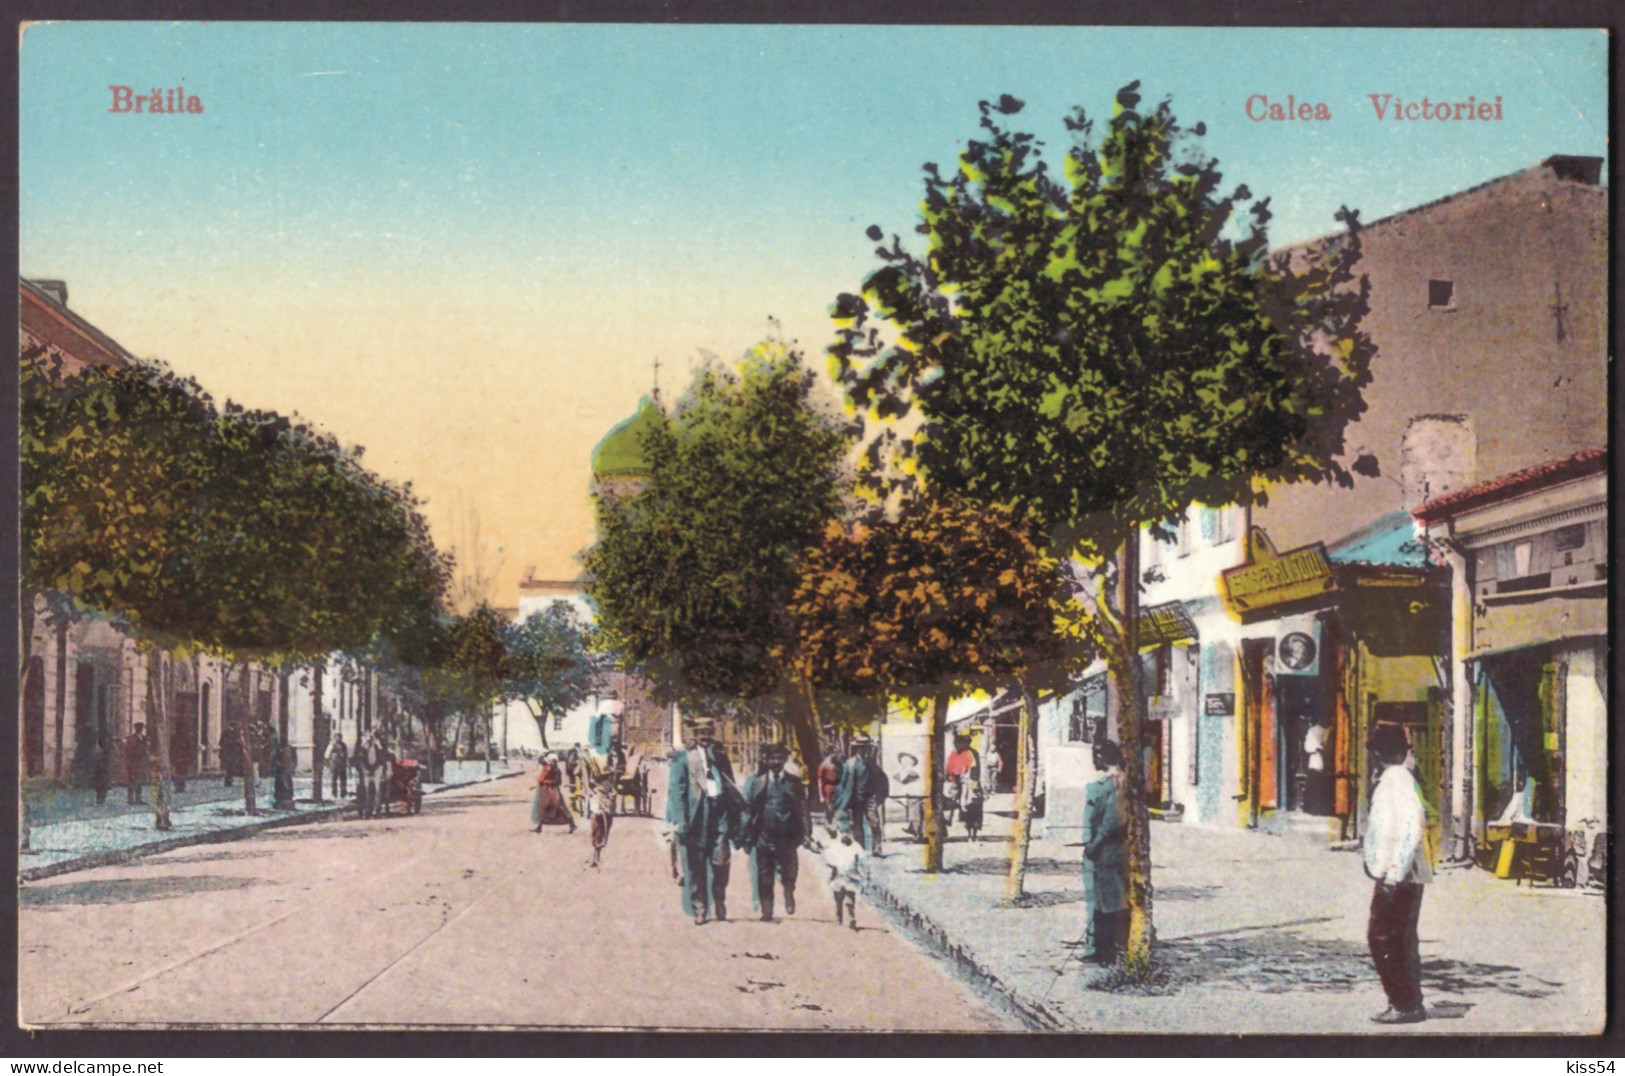 RO 89 - 23921 BRAILA, Street Stores, Romania - Old Postcard - Unused - Roumanie